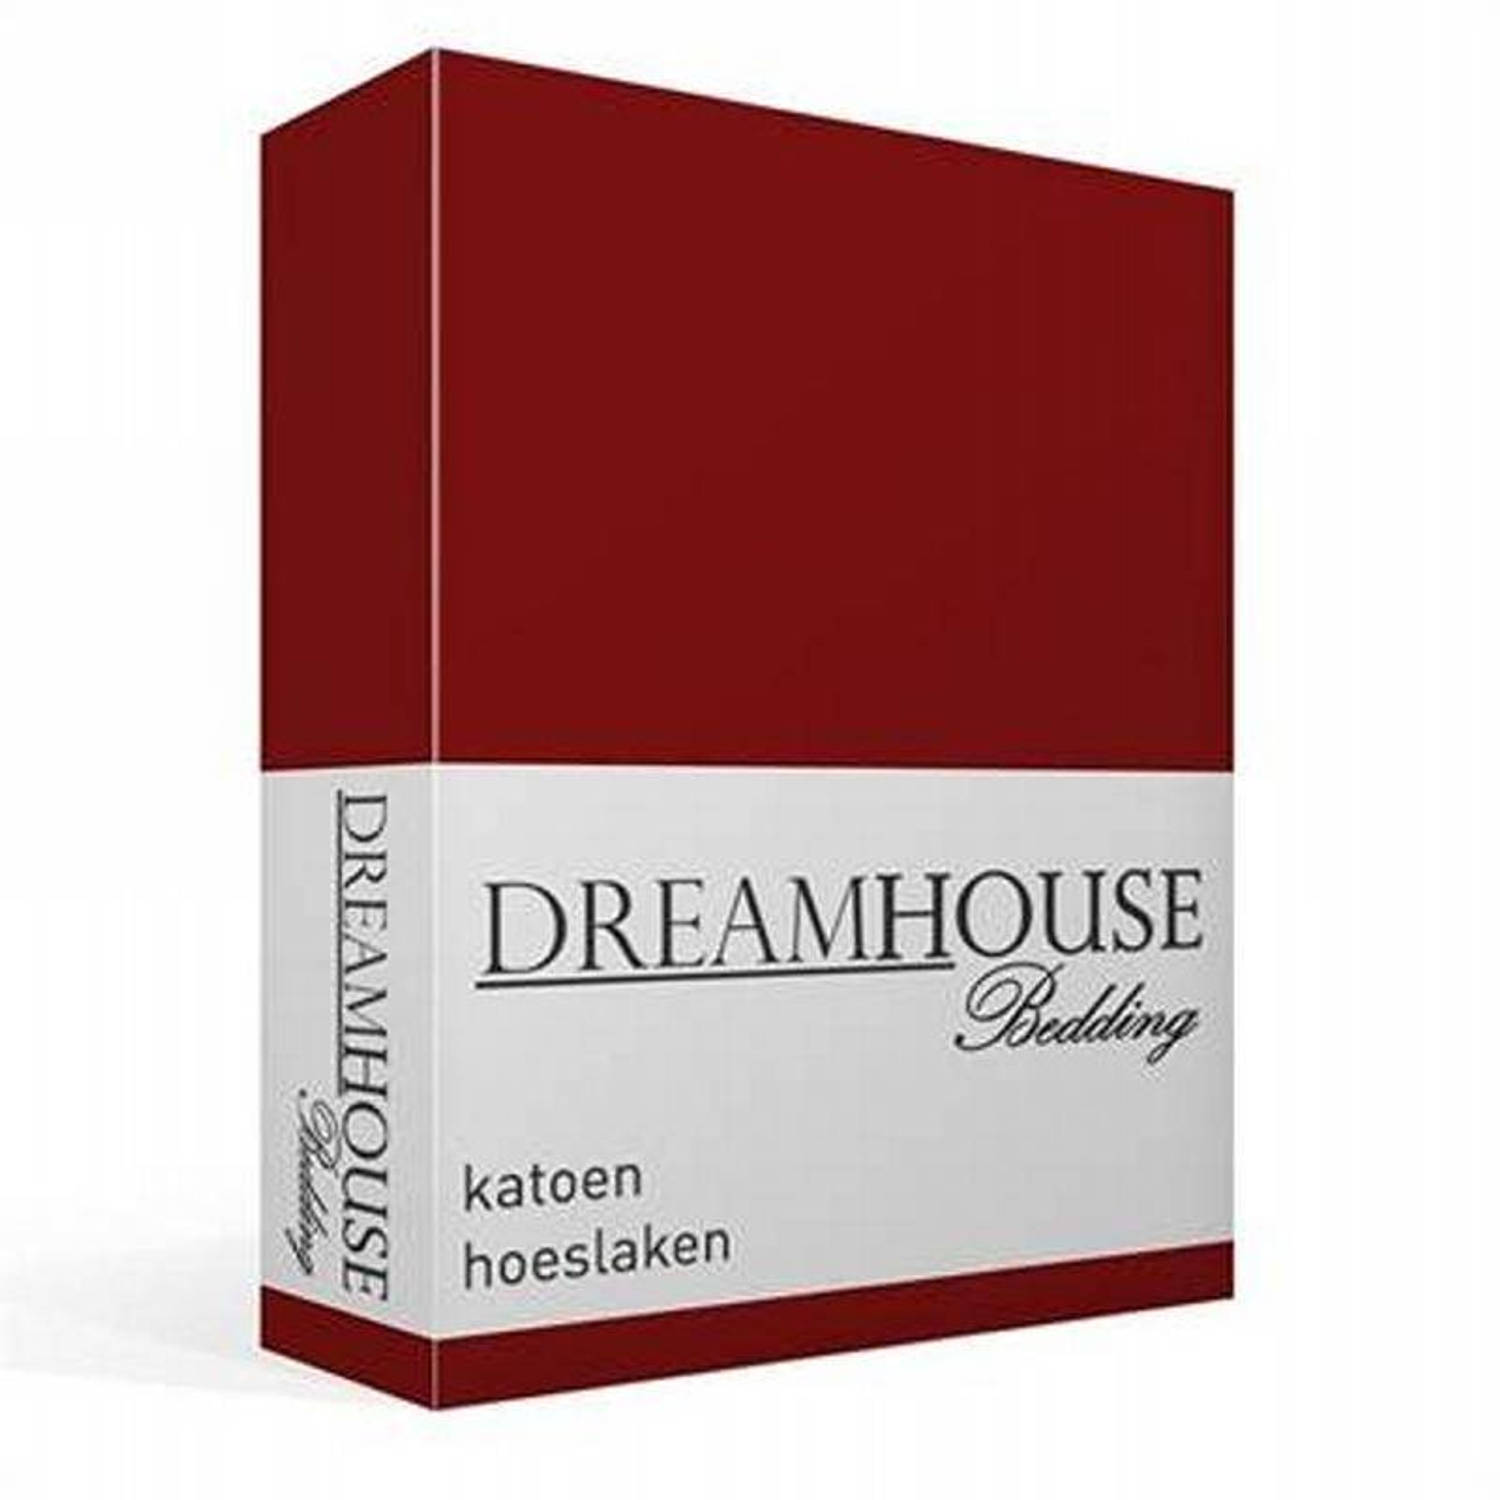 Dreamhouse Bedding katoen hoeslaken - 100% katoen - 2-persoons (120x200 cm) - Rood